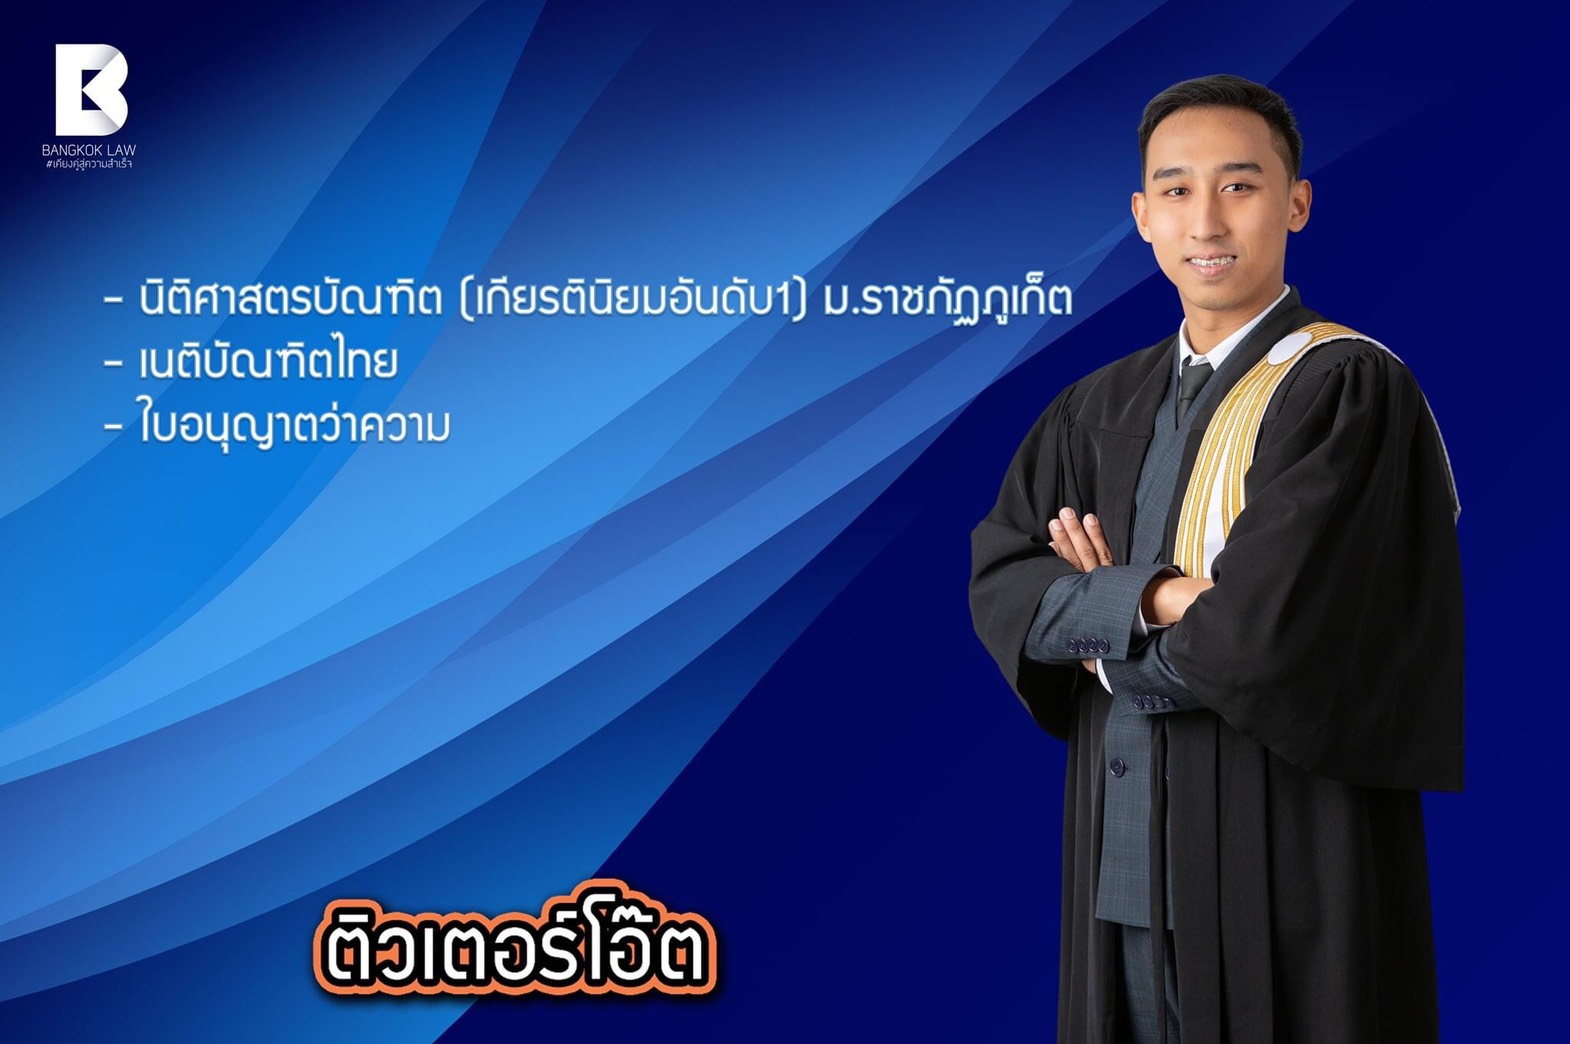 bangkoklaw adsvertisment